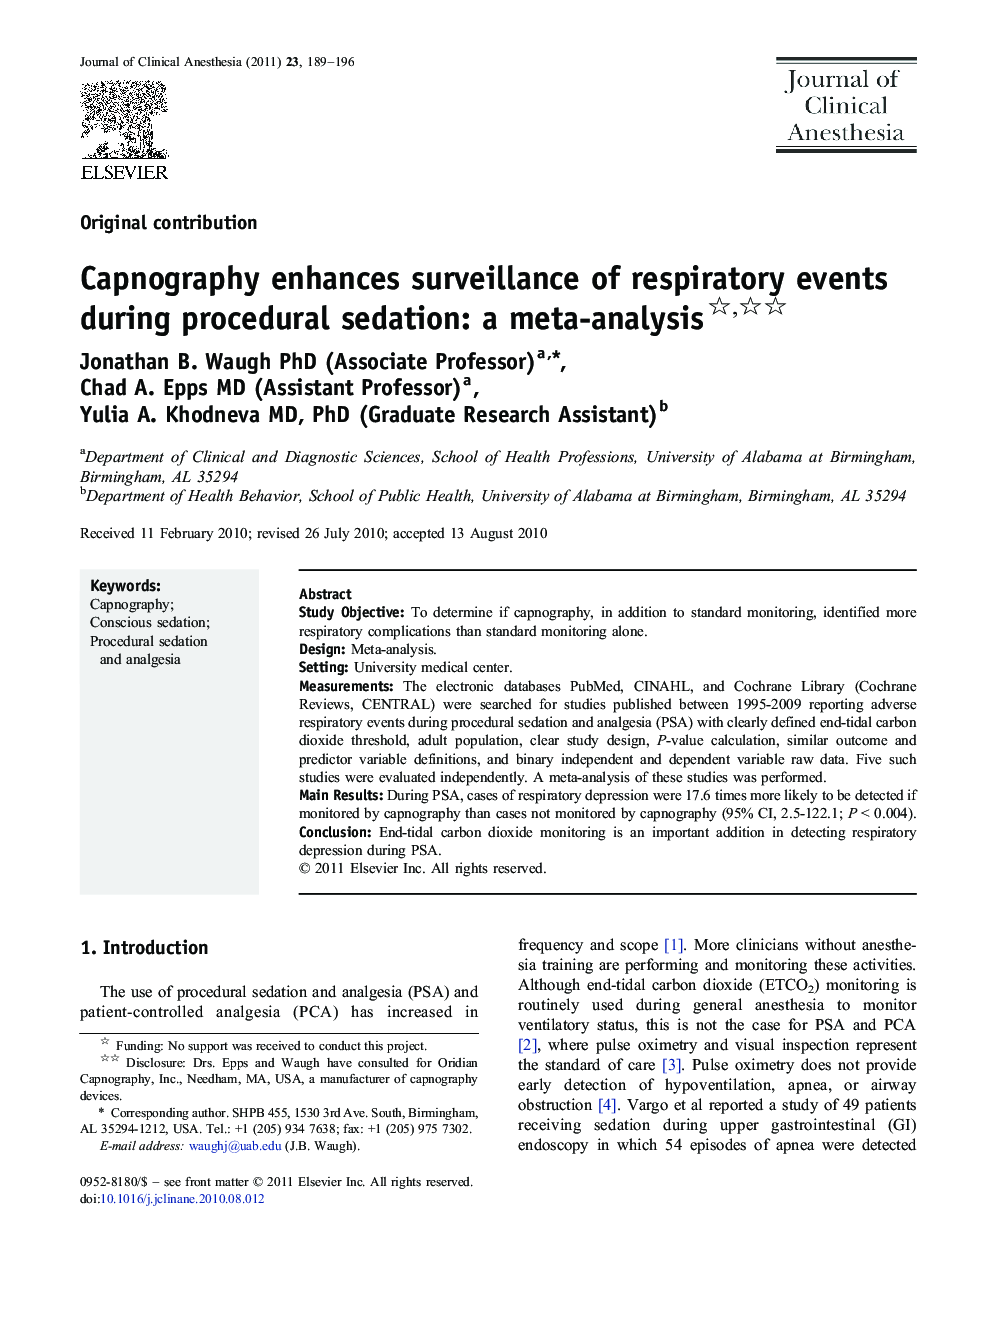 Capnography enhances surveillance of respiratory events during procedural sedation: a meta-analysis 